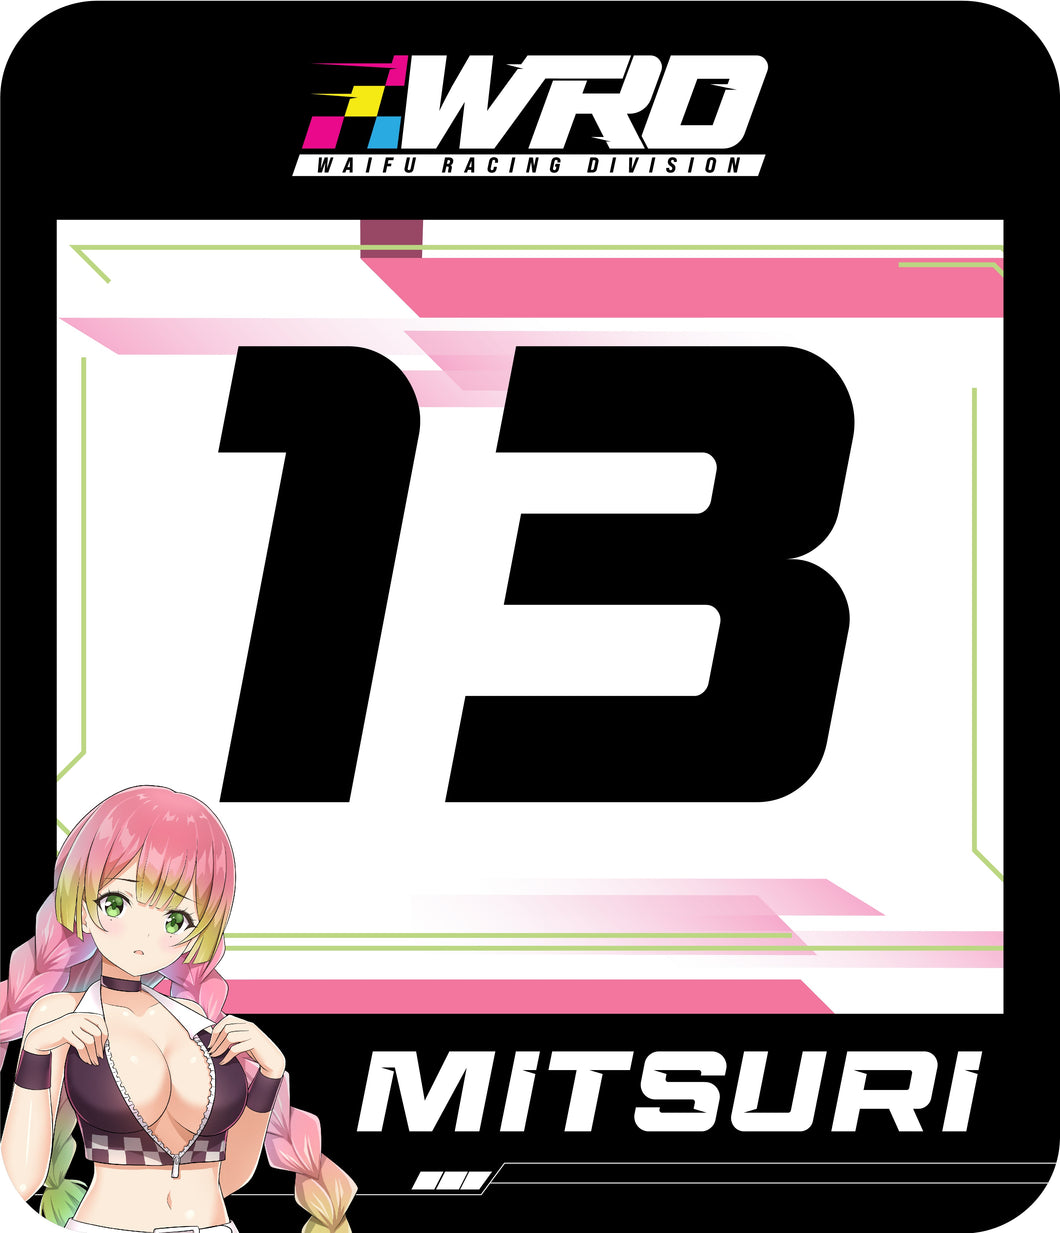 Mitsuri Track Number (Set)